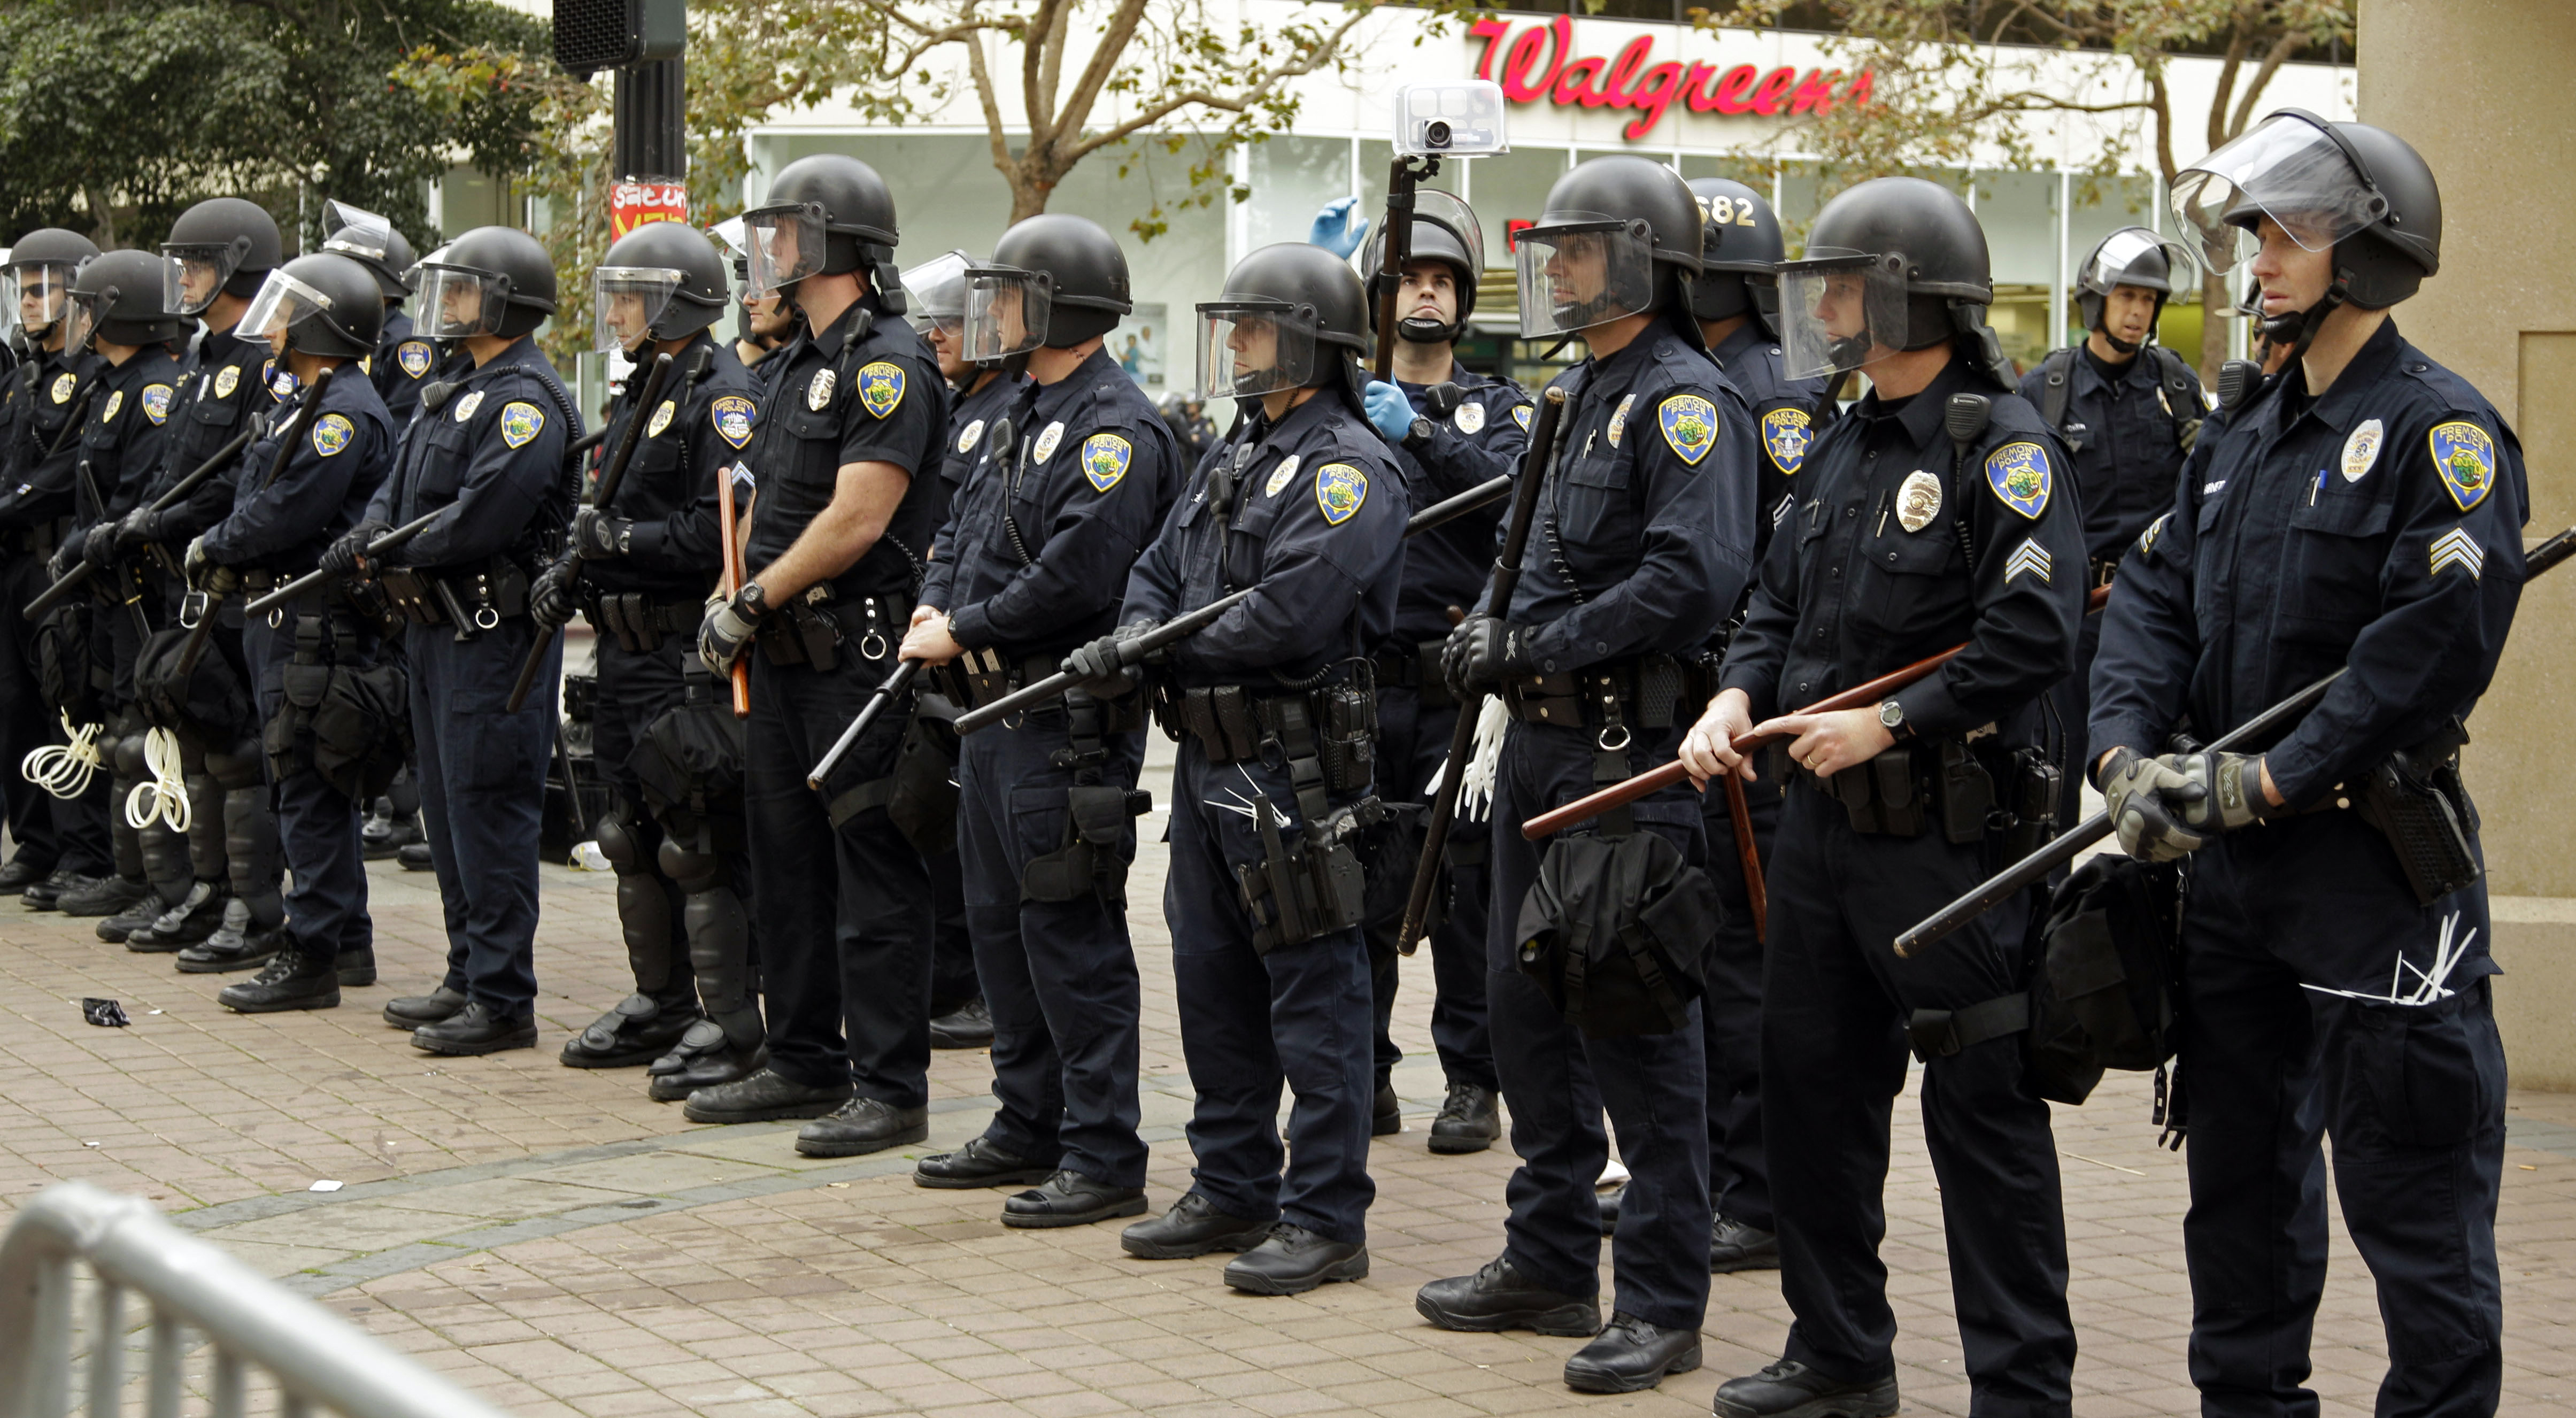 Granater, Occupy Wall Street, Tårgas, Polisen, Demonstration, Occupy Oakland